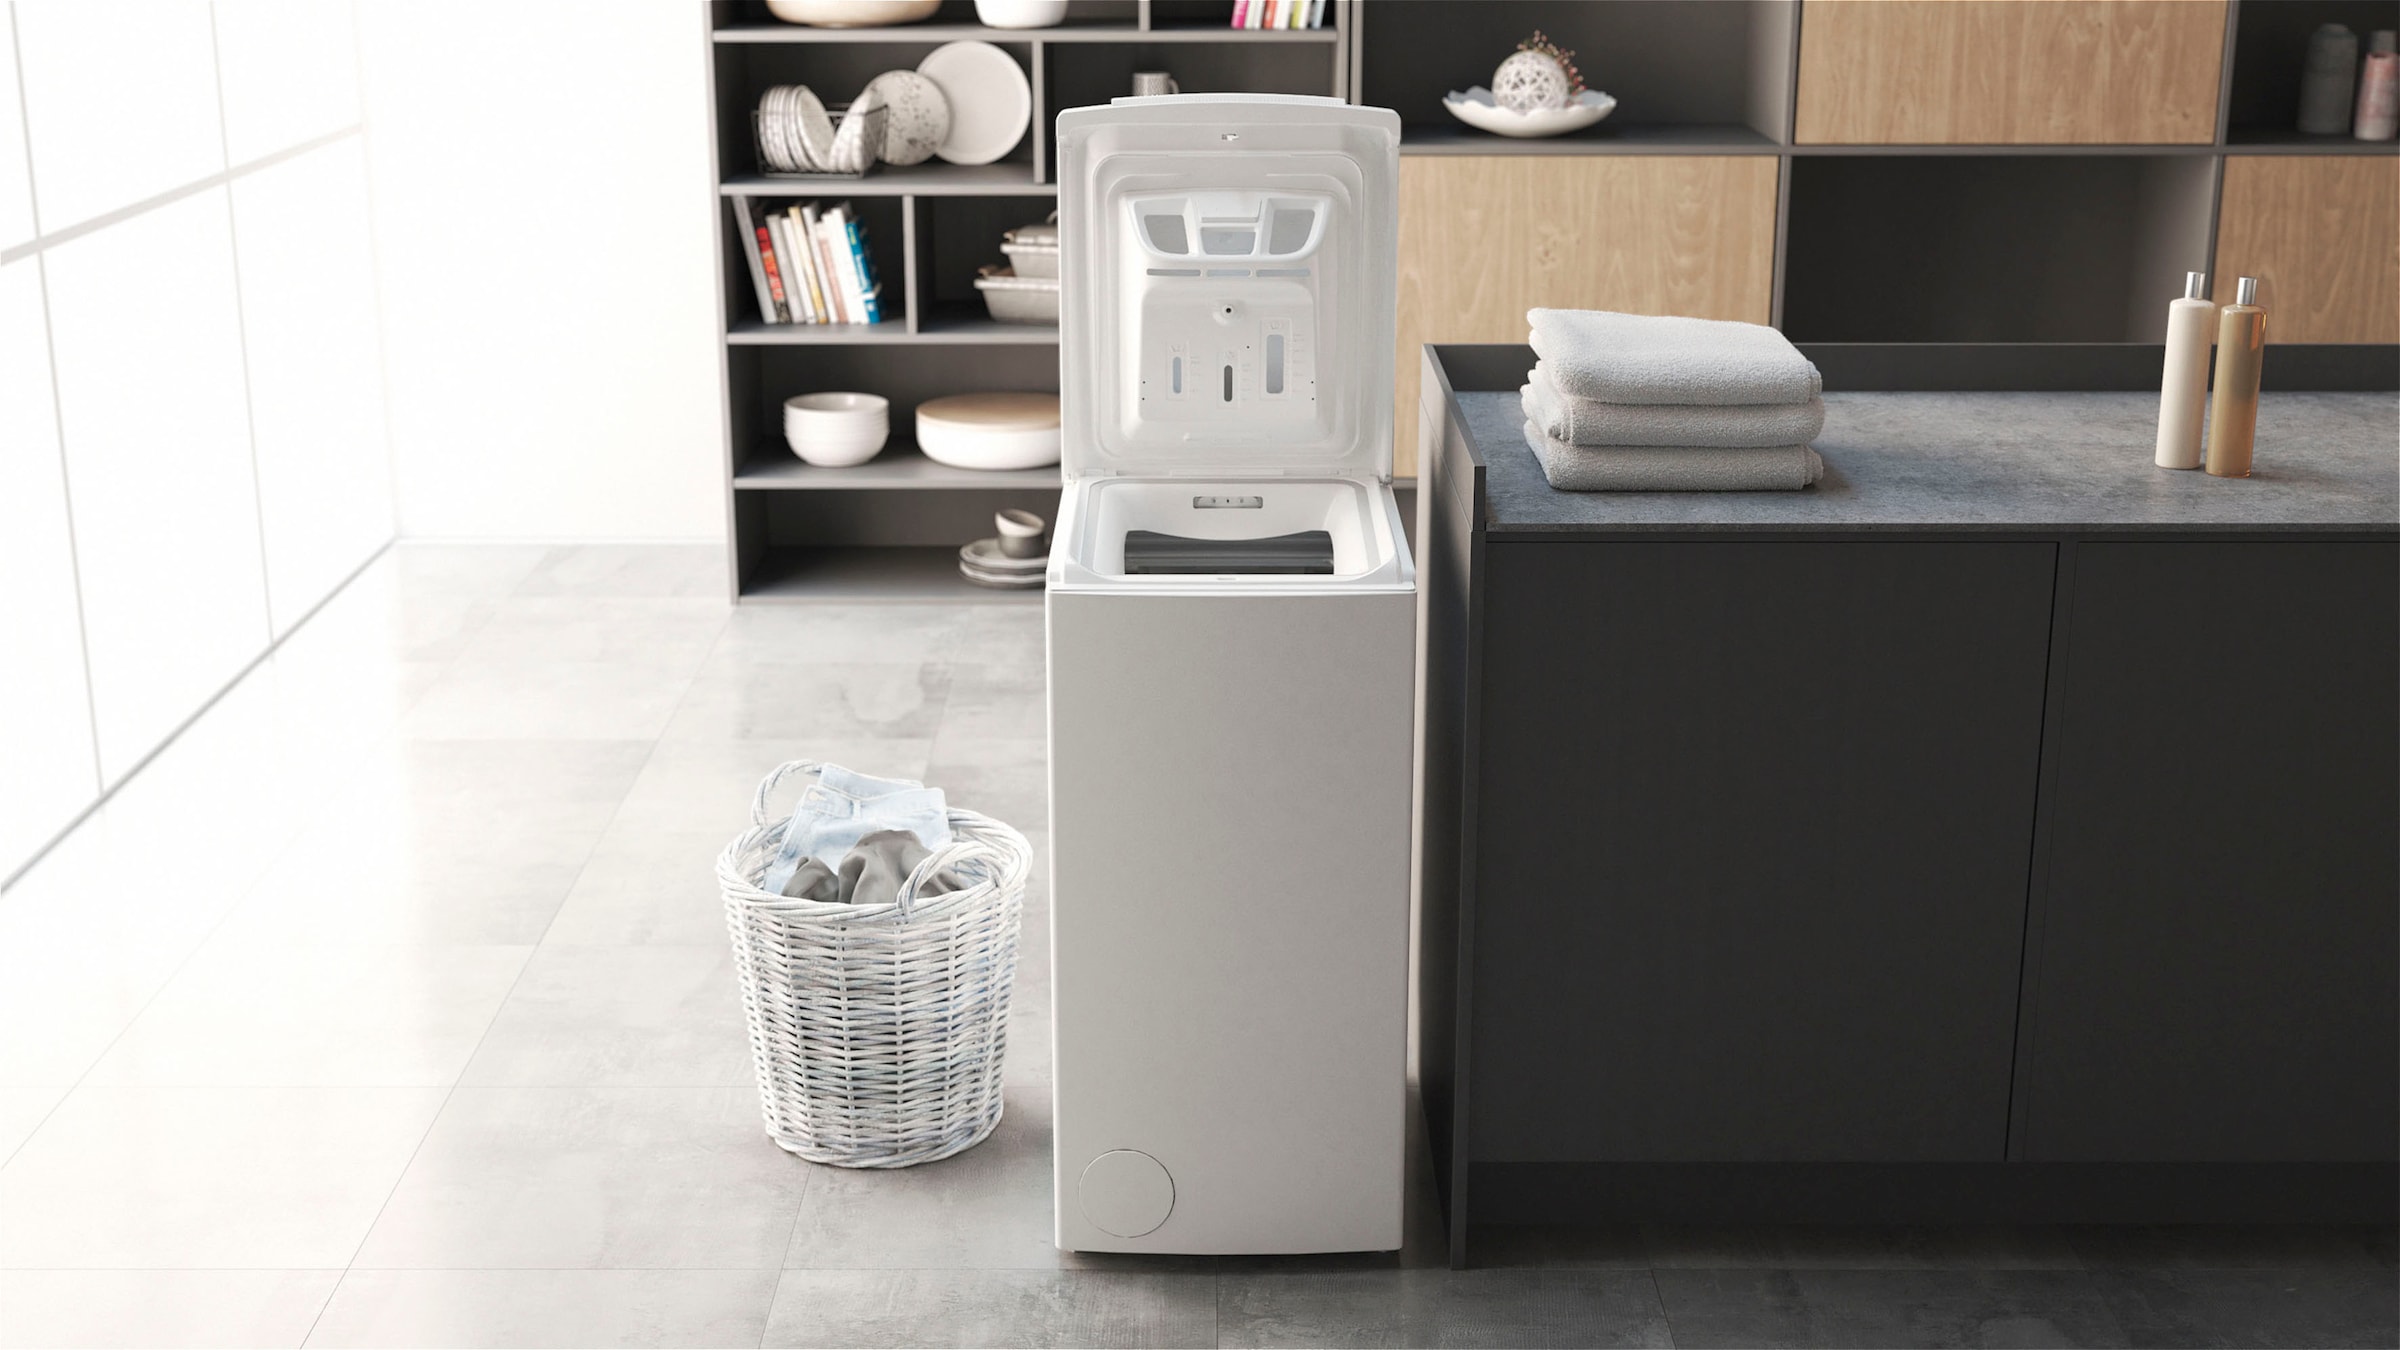 BAUKNECHT Waschmaschine Toplader »WAT Smart Eco 12C«, WAT Smart Eco 12C, 6 kg, 1200 U/min